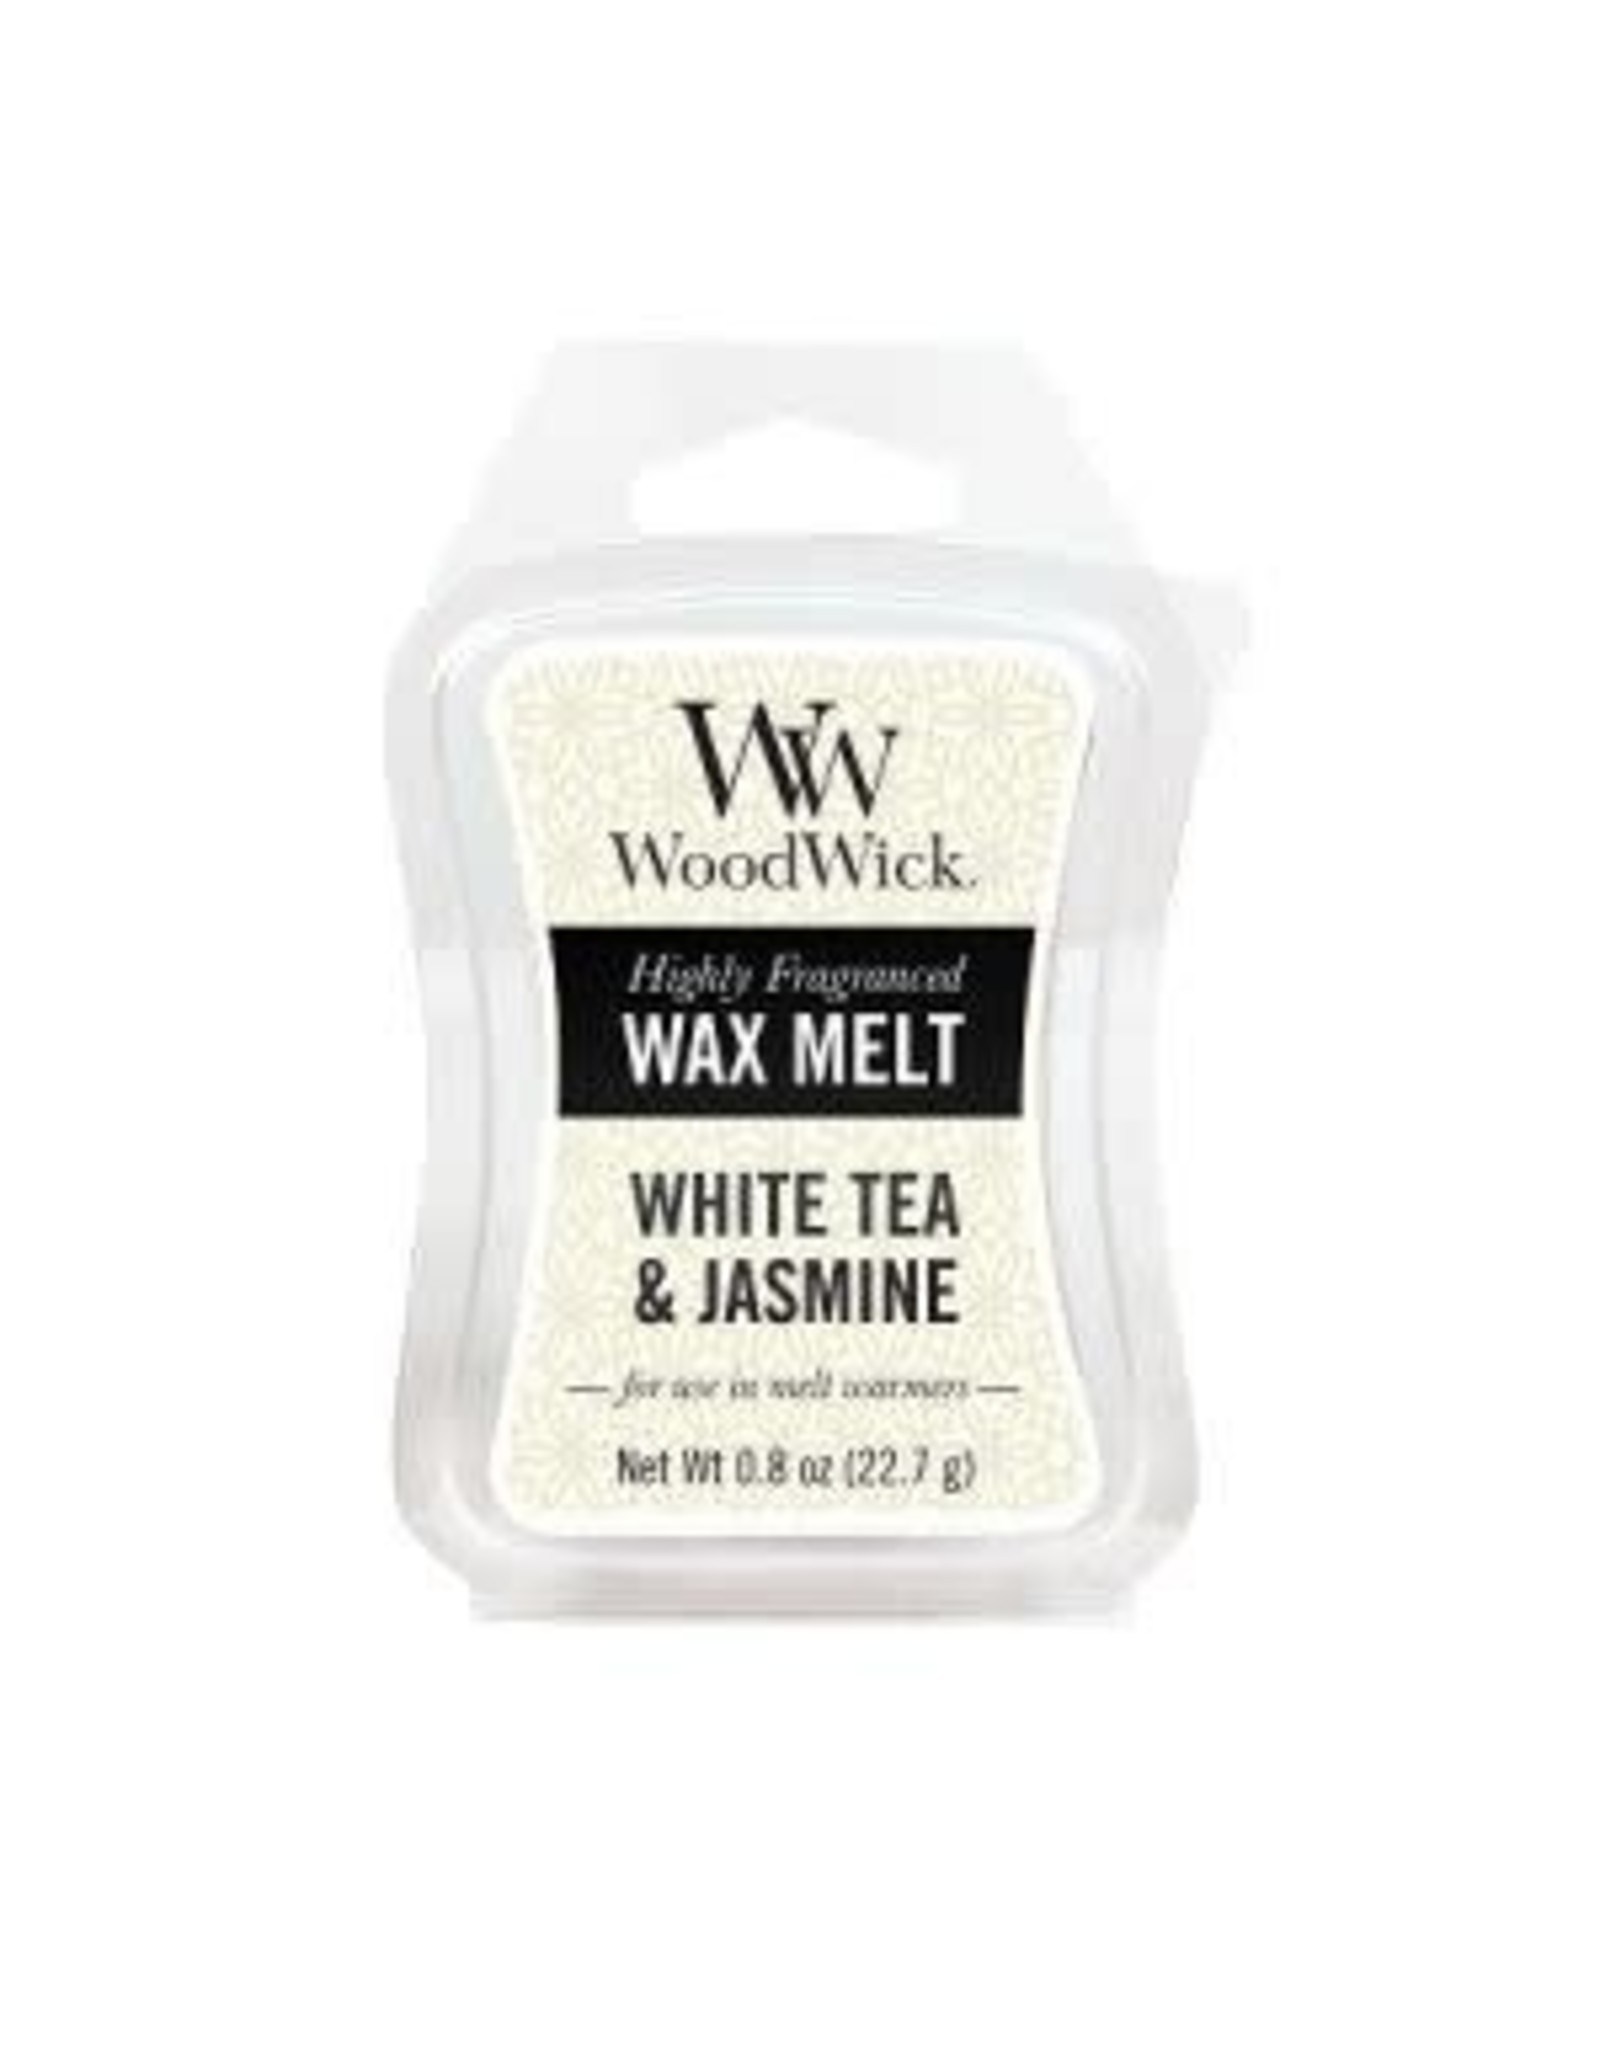 Woodwick wax melt white tea Jasmine